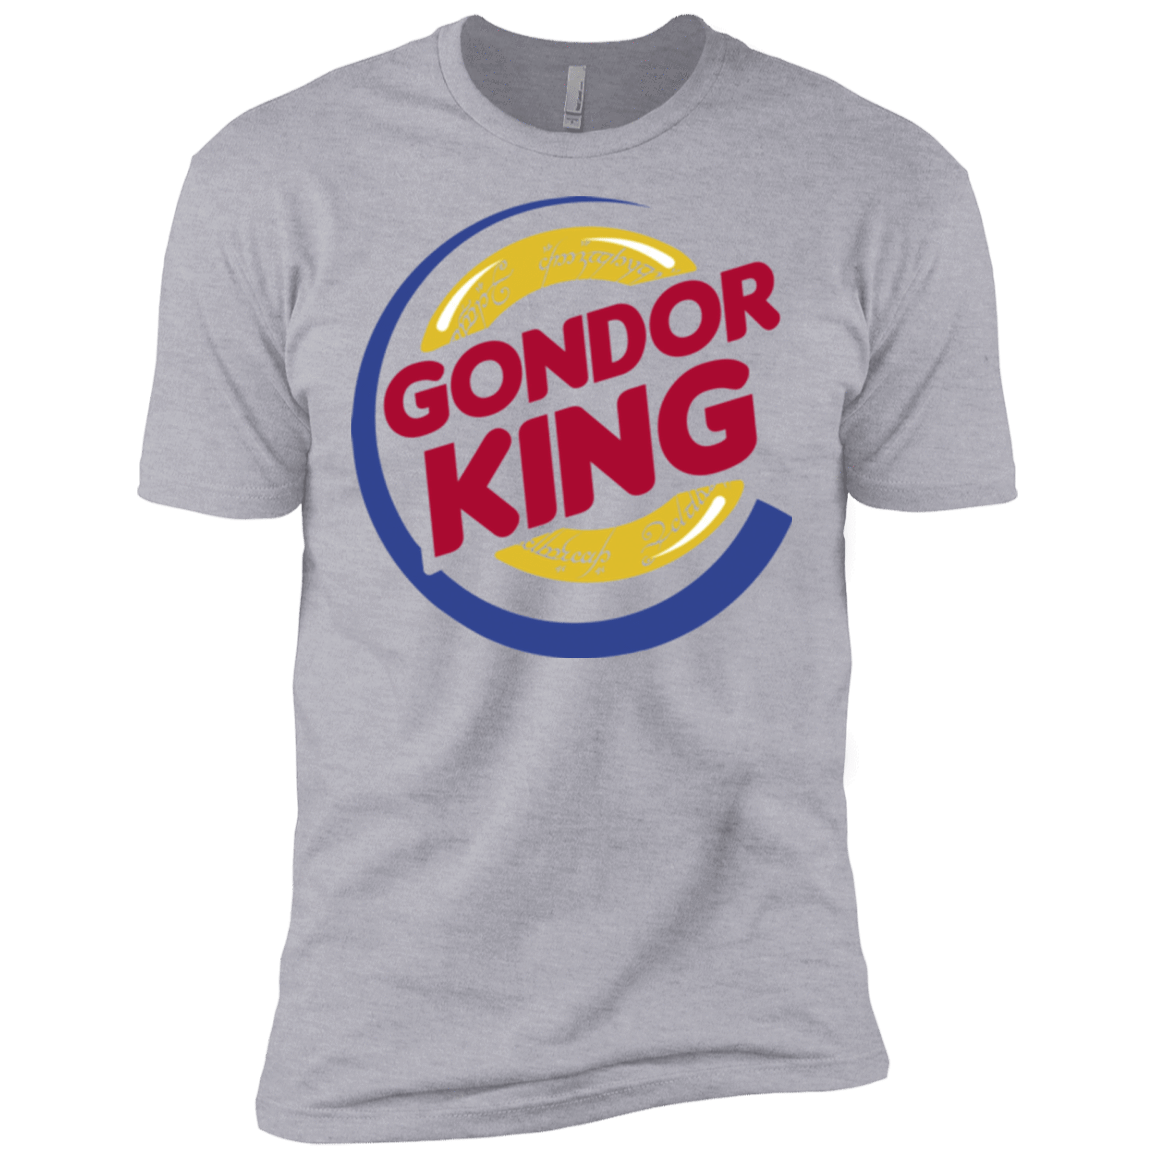 T-Shirts Heather Grey / X-Small Gondor King Men's Premium T-Shirt